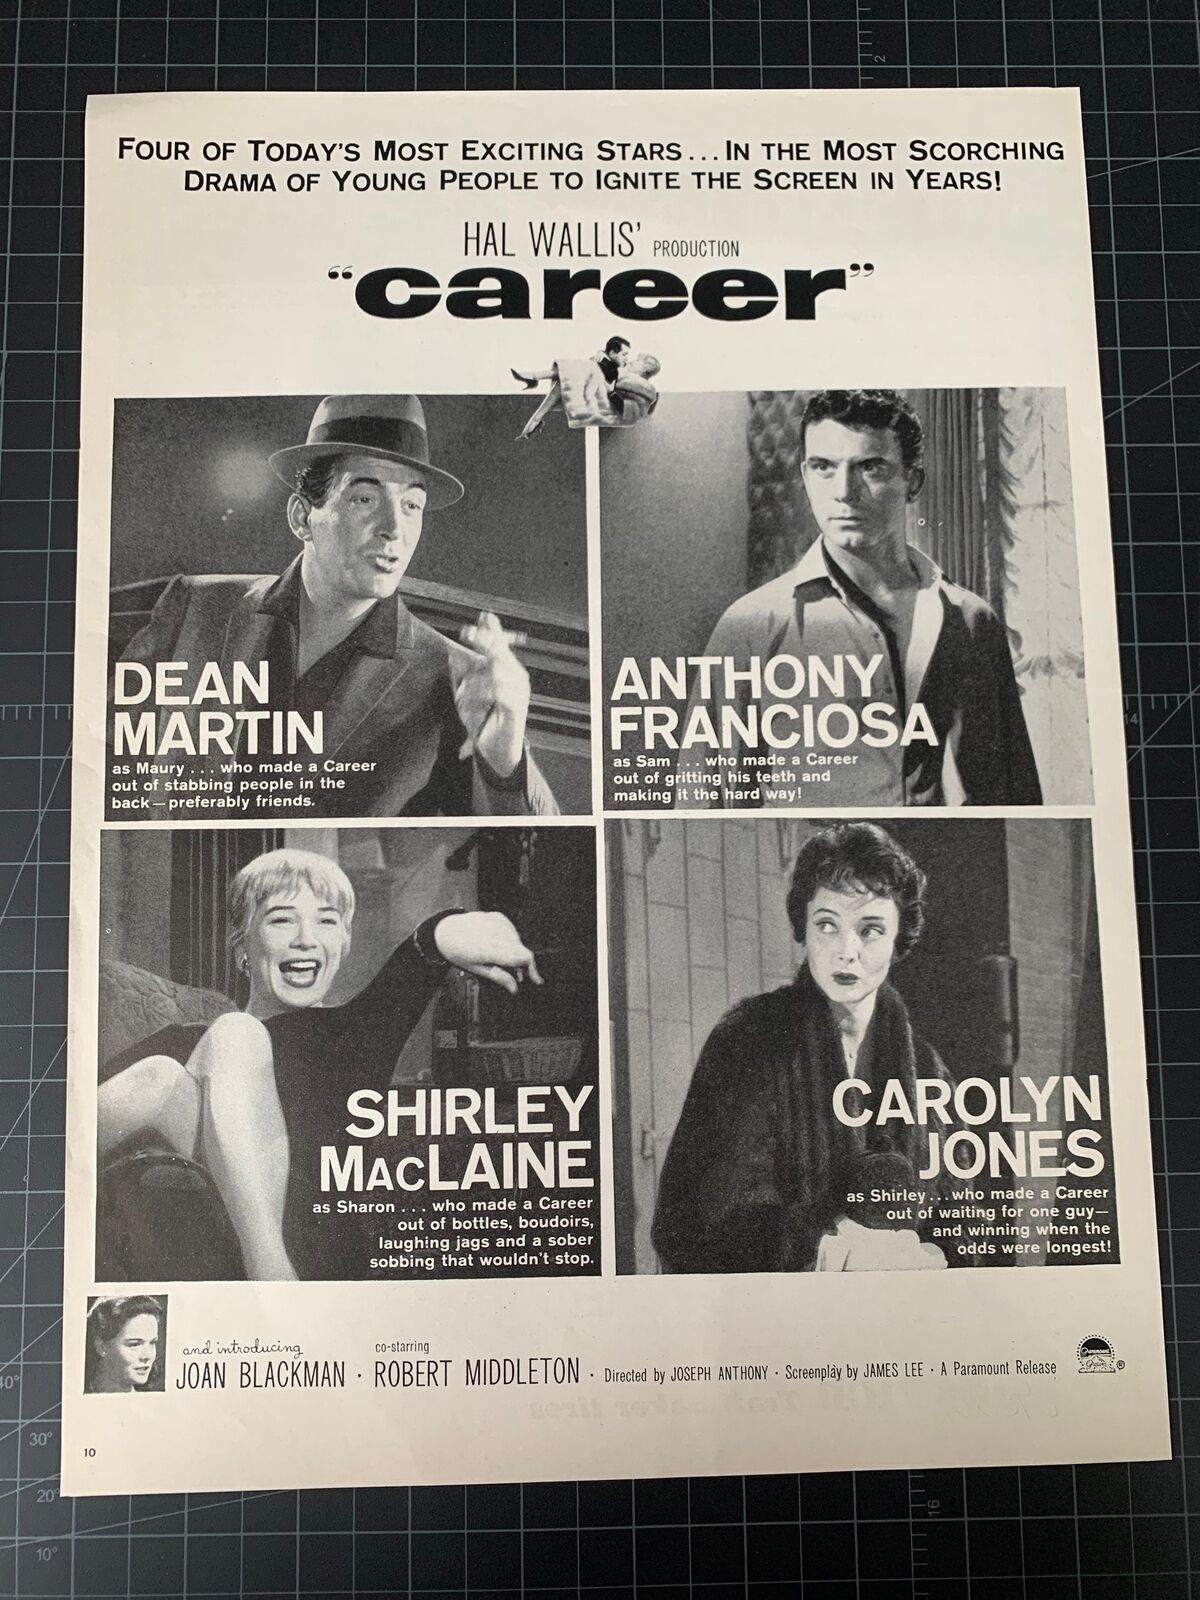 Vintage 1959 “Career” Film Print Ad - Dean Martin - Shirley MacLaine